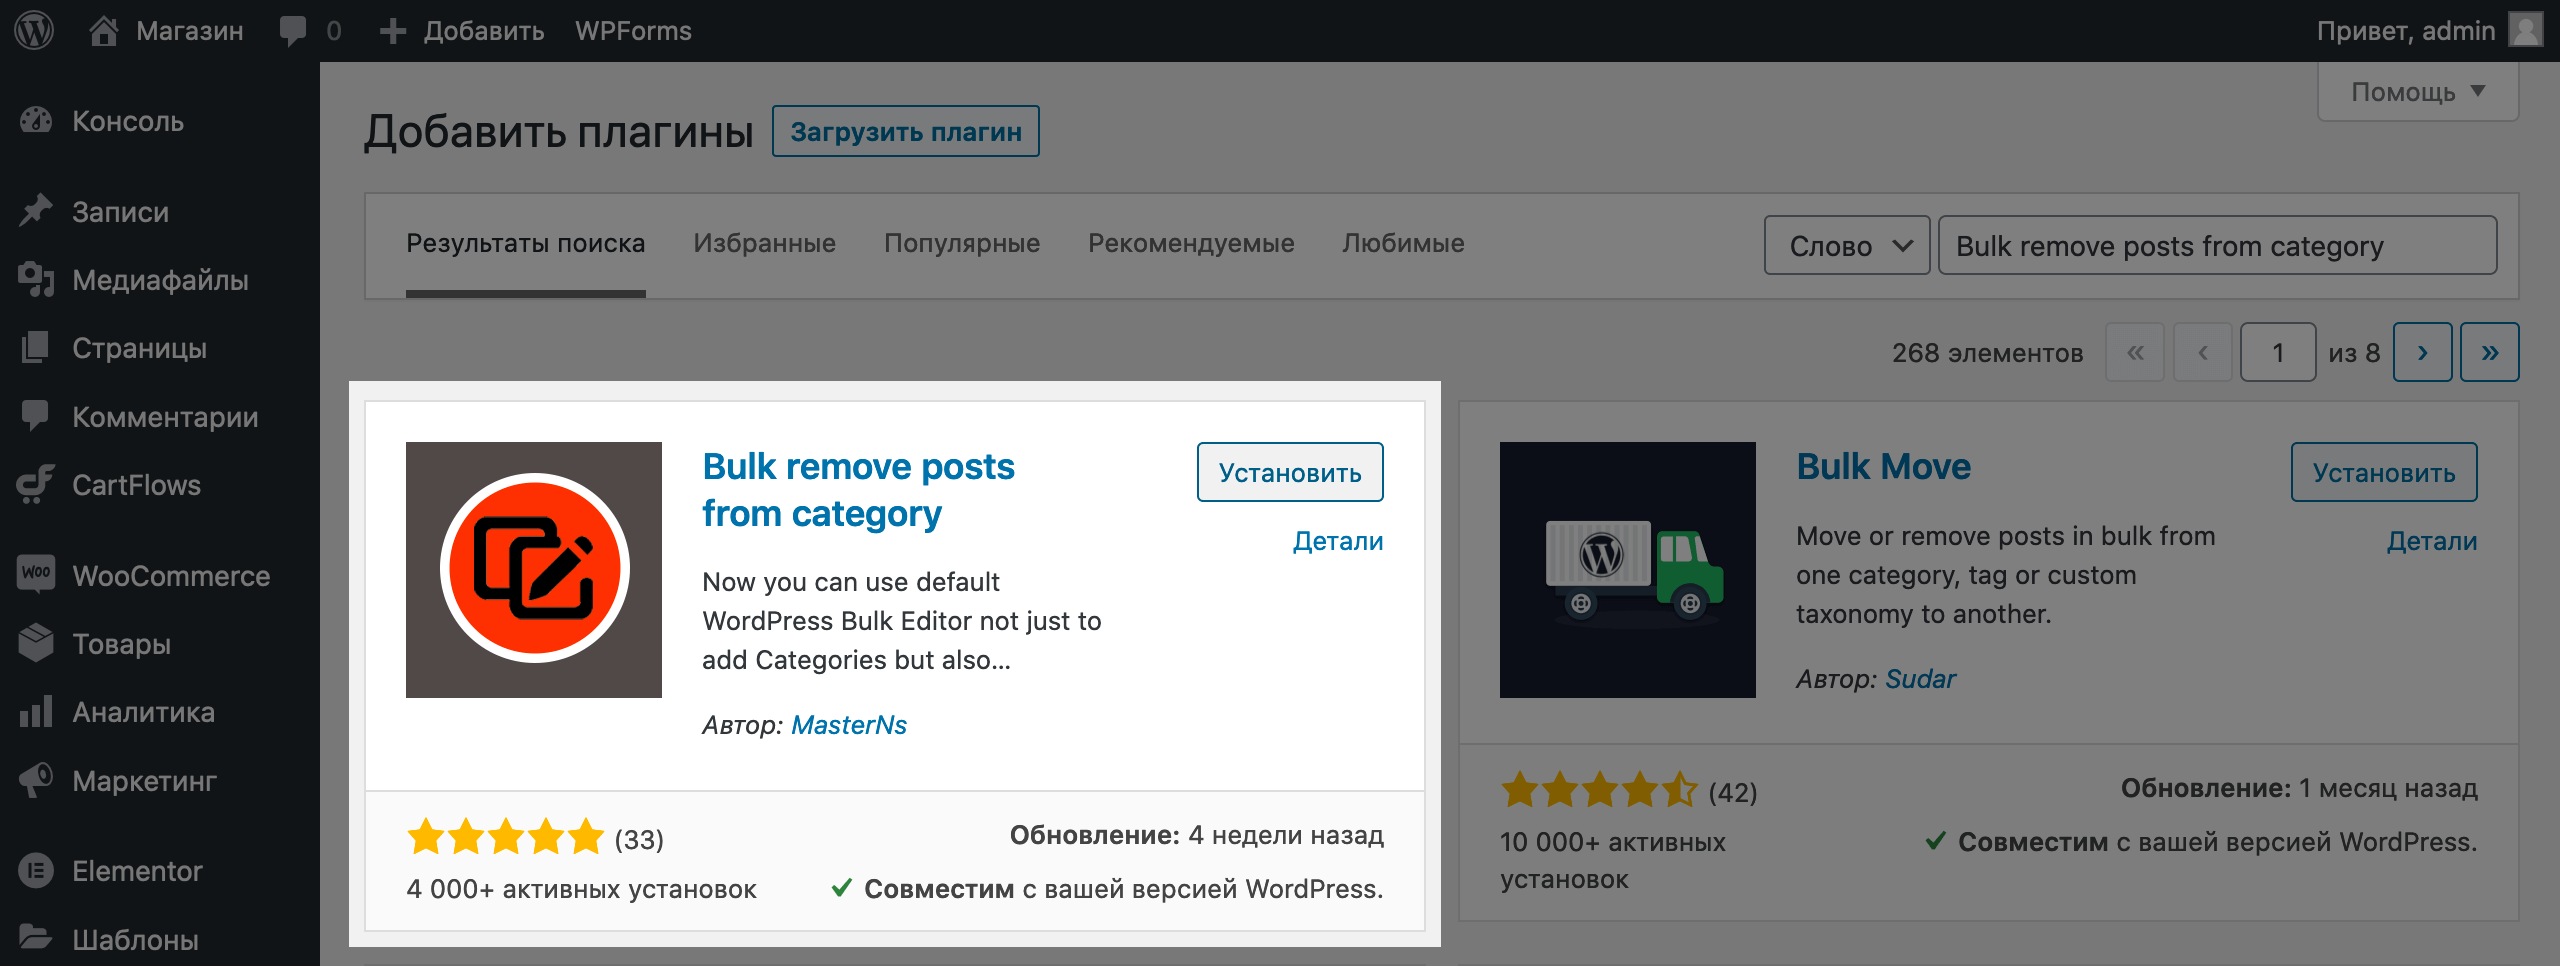 Создание интернет-магазина Вордпресс: установка плагина «Bulk remove posts from category»